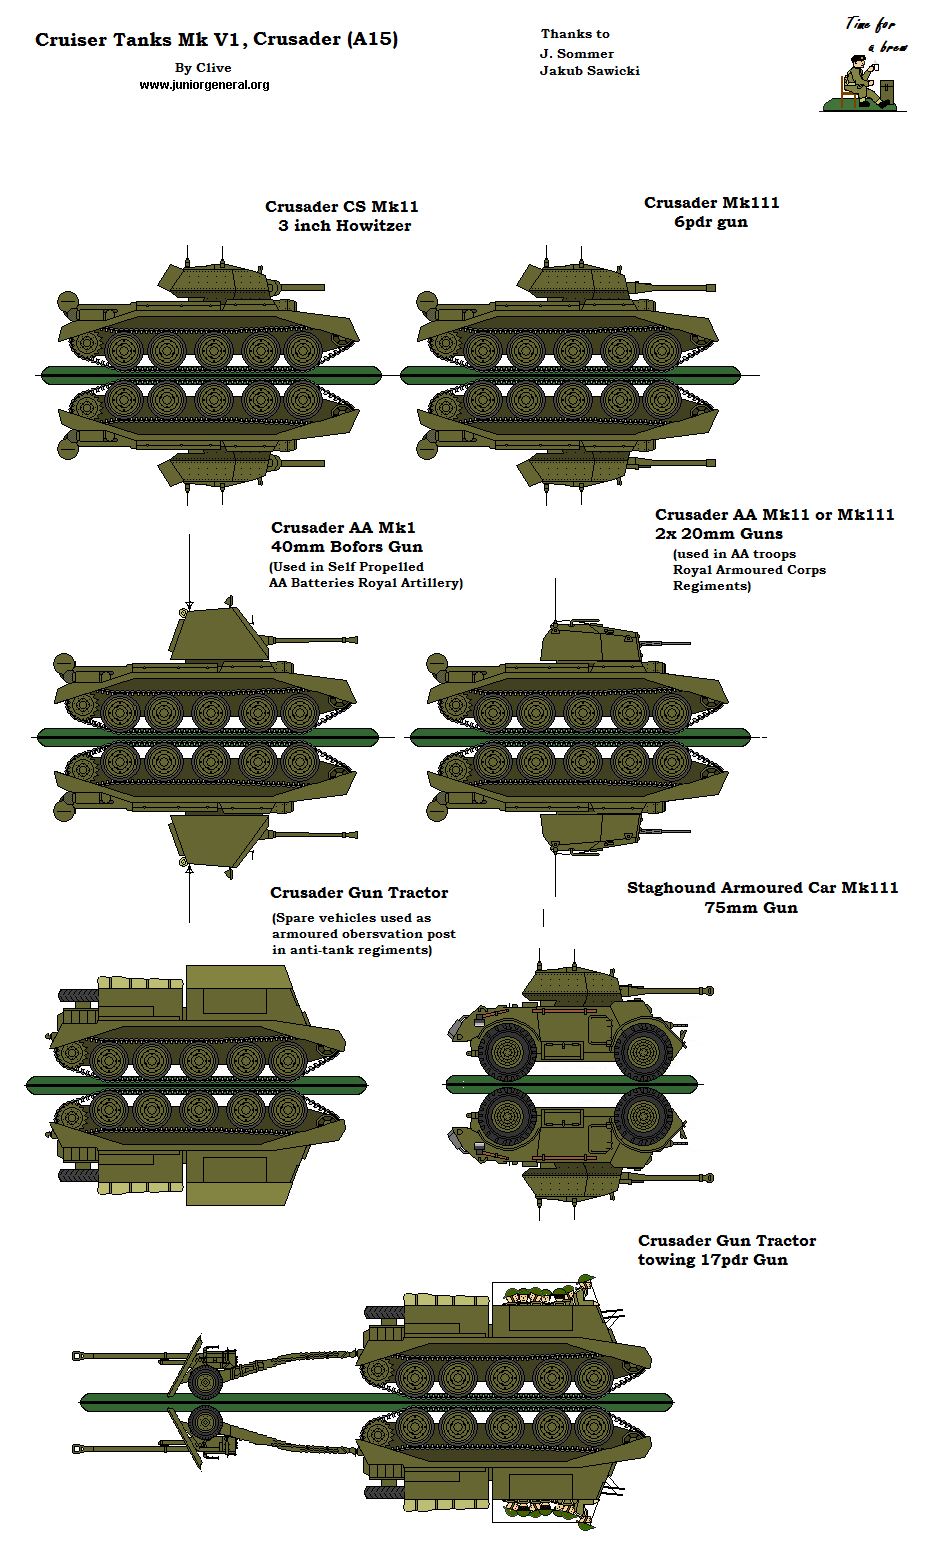 Cruiser Mk VI Crusader (A15) Tanks 1